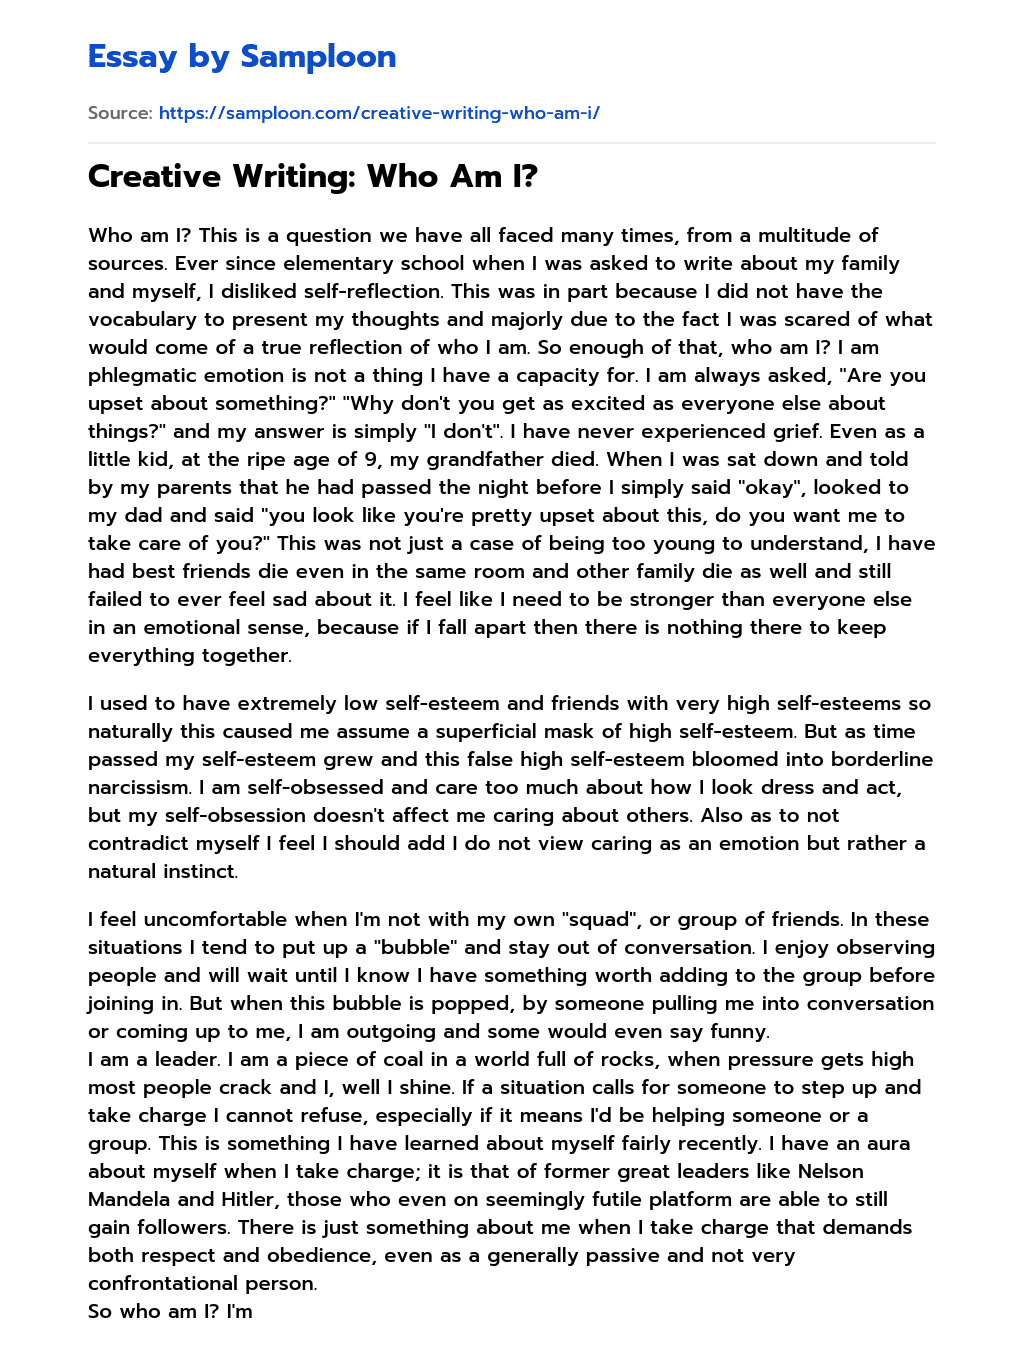 Creative Writing: Who Am I? essay